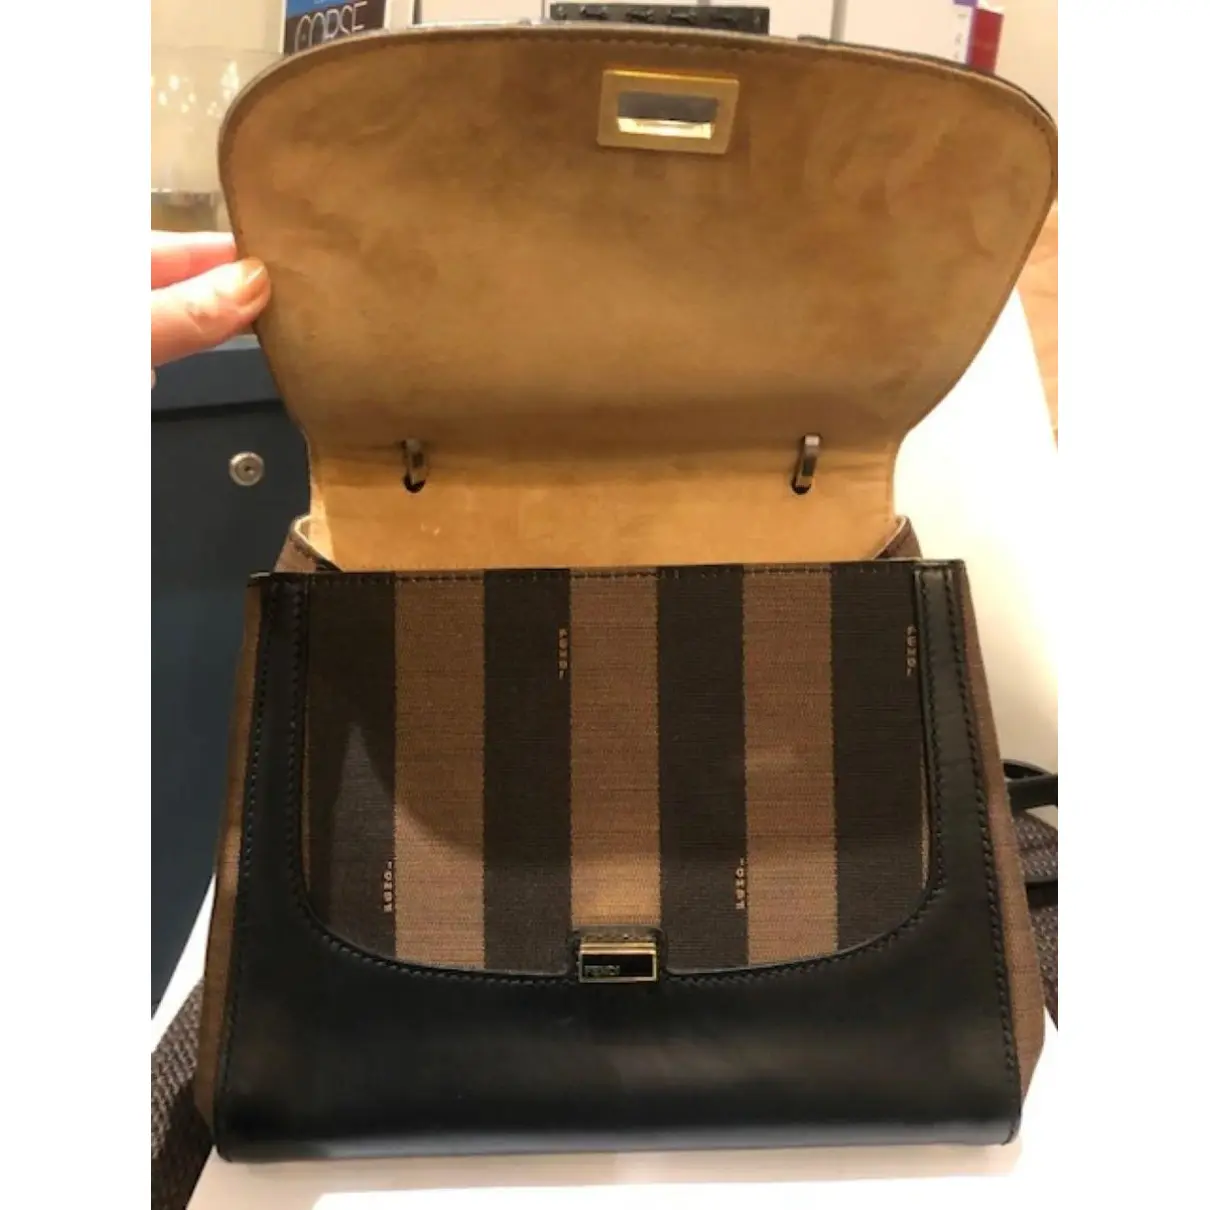 Silvana leather handbag Fendi